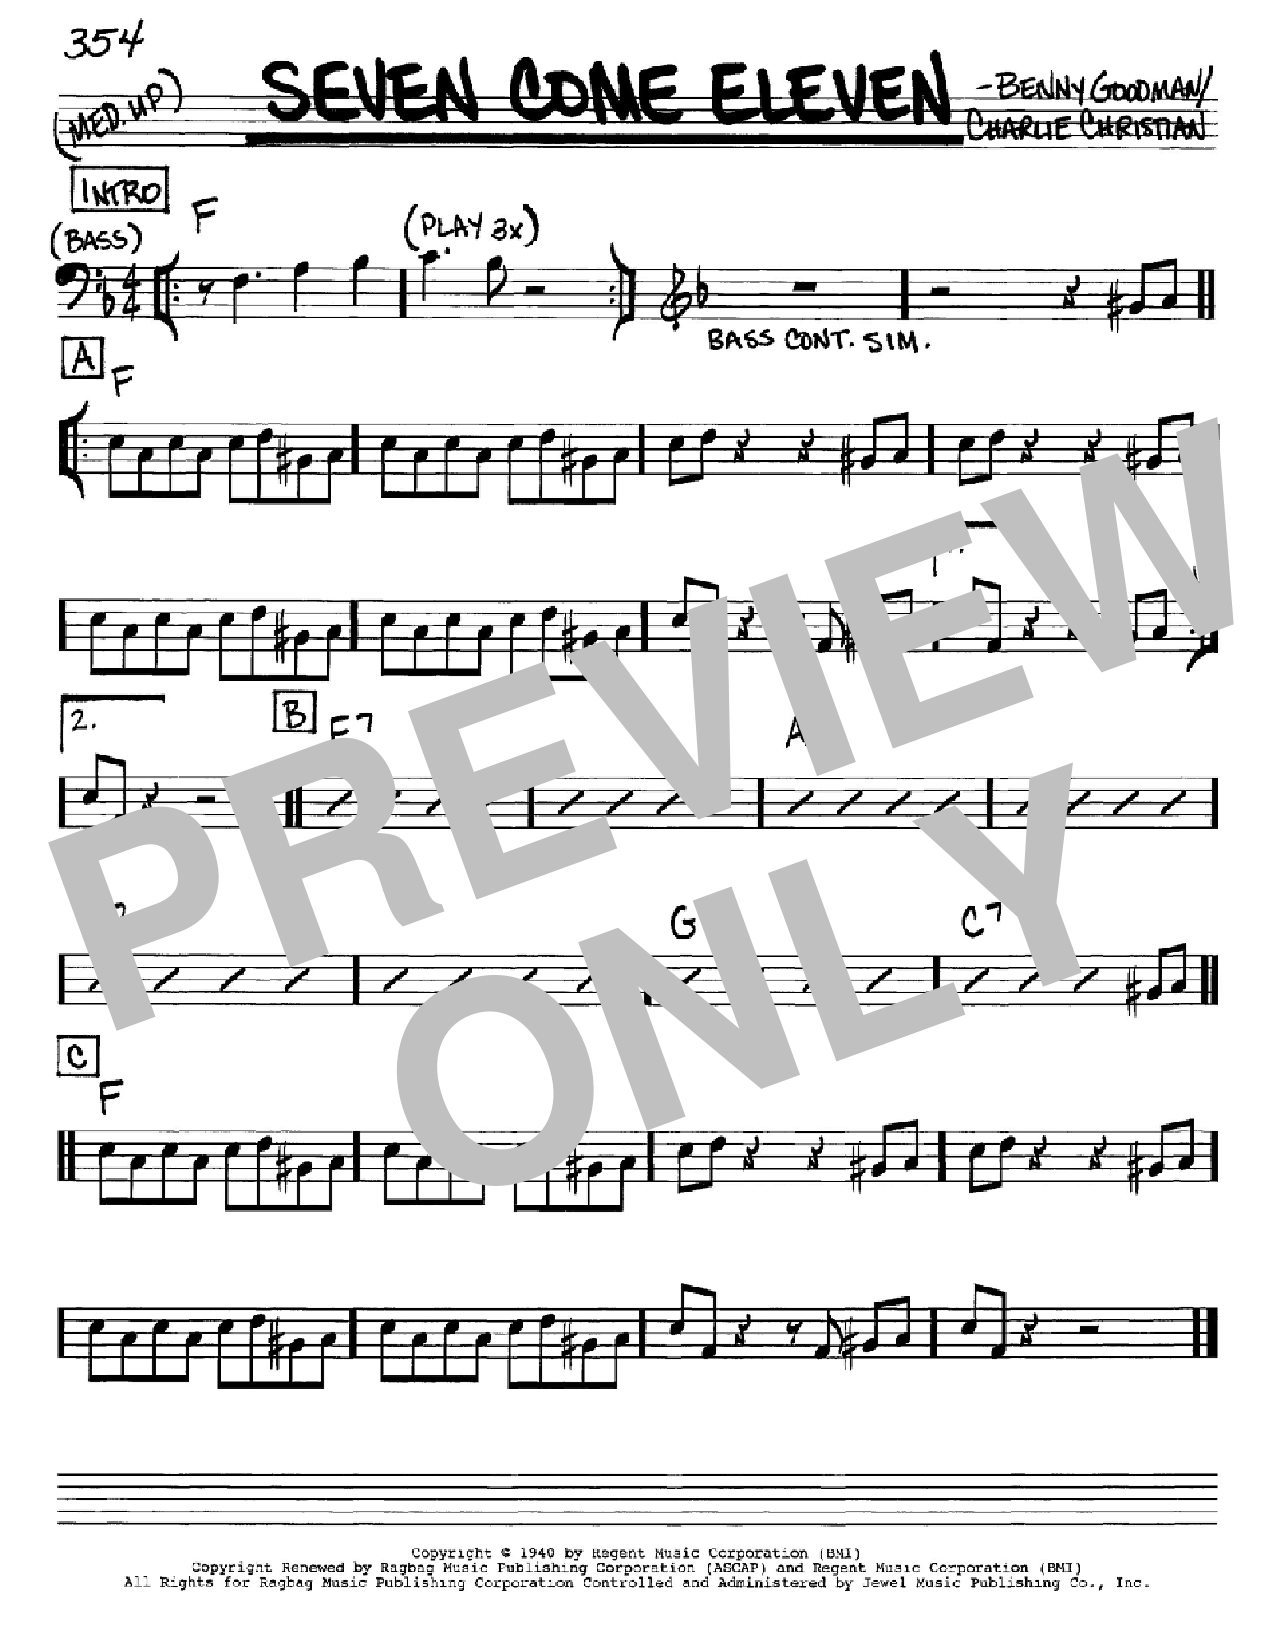 Download Benny Goodman Seven Come Eleven Sheet Music